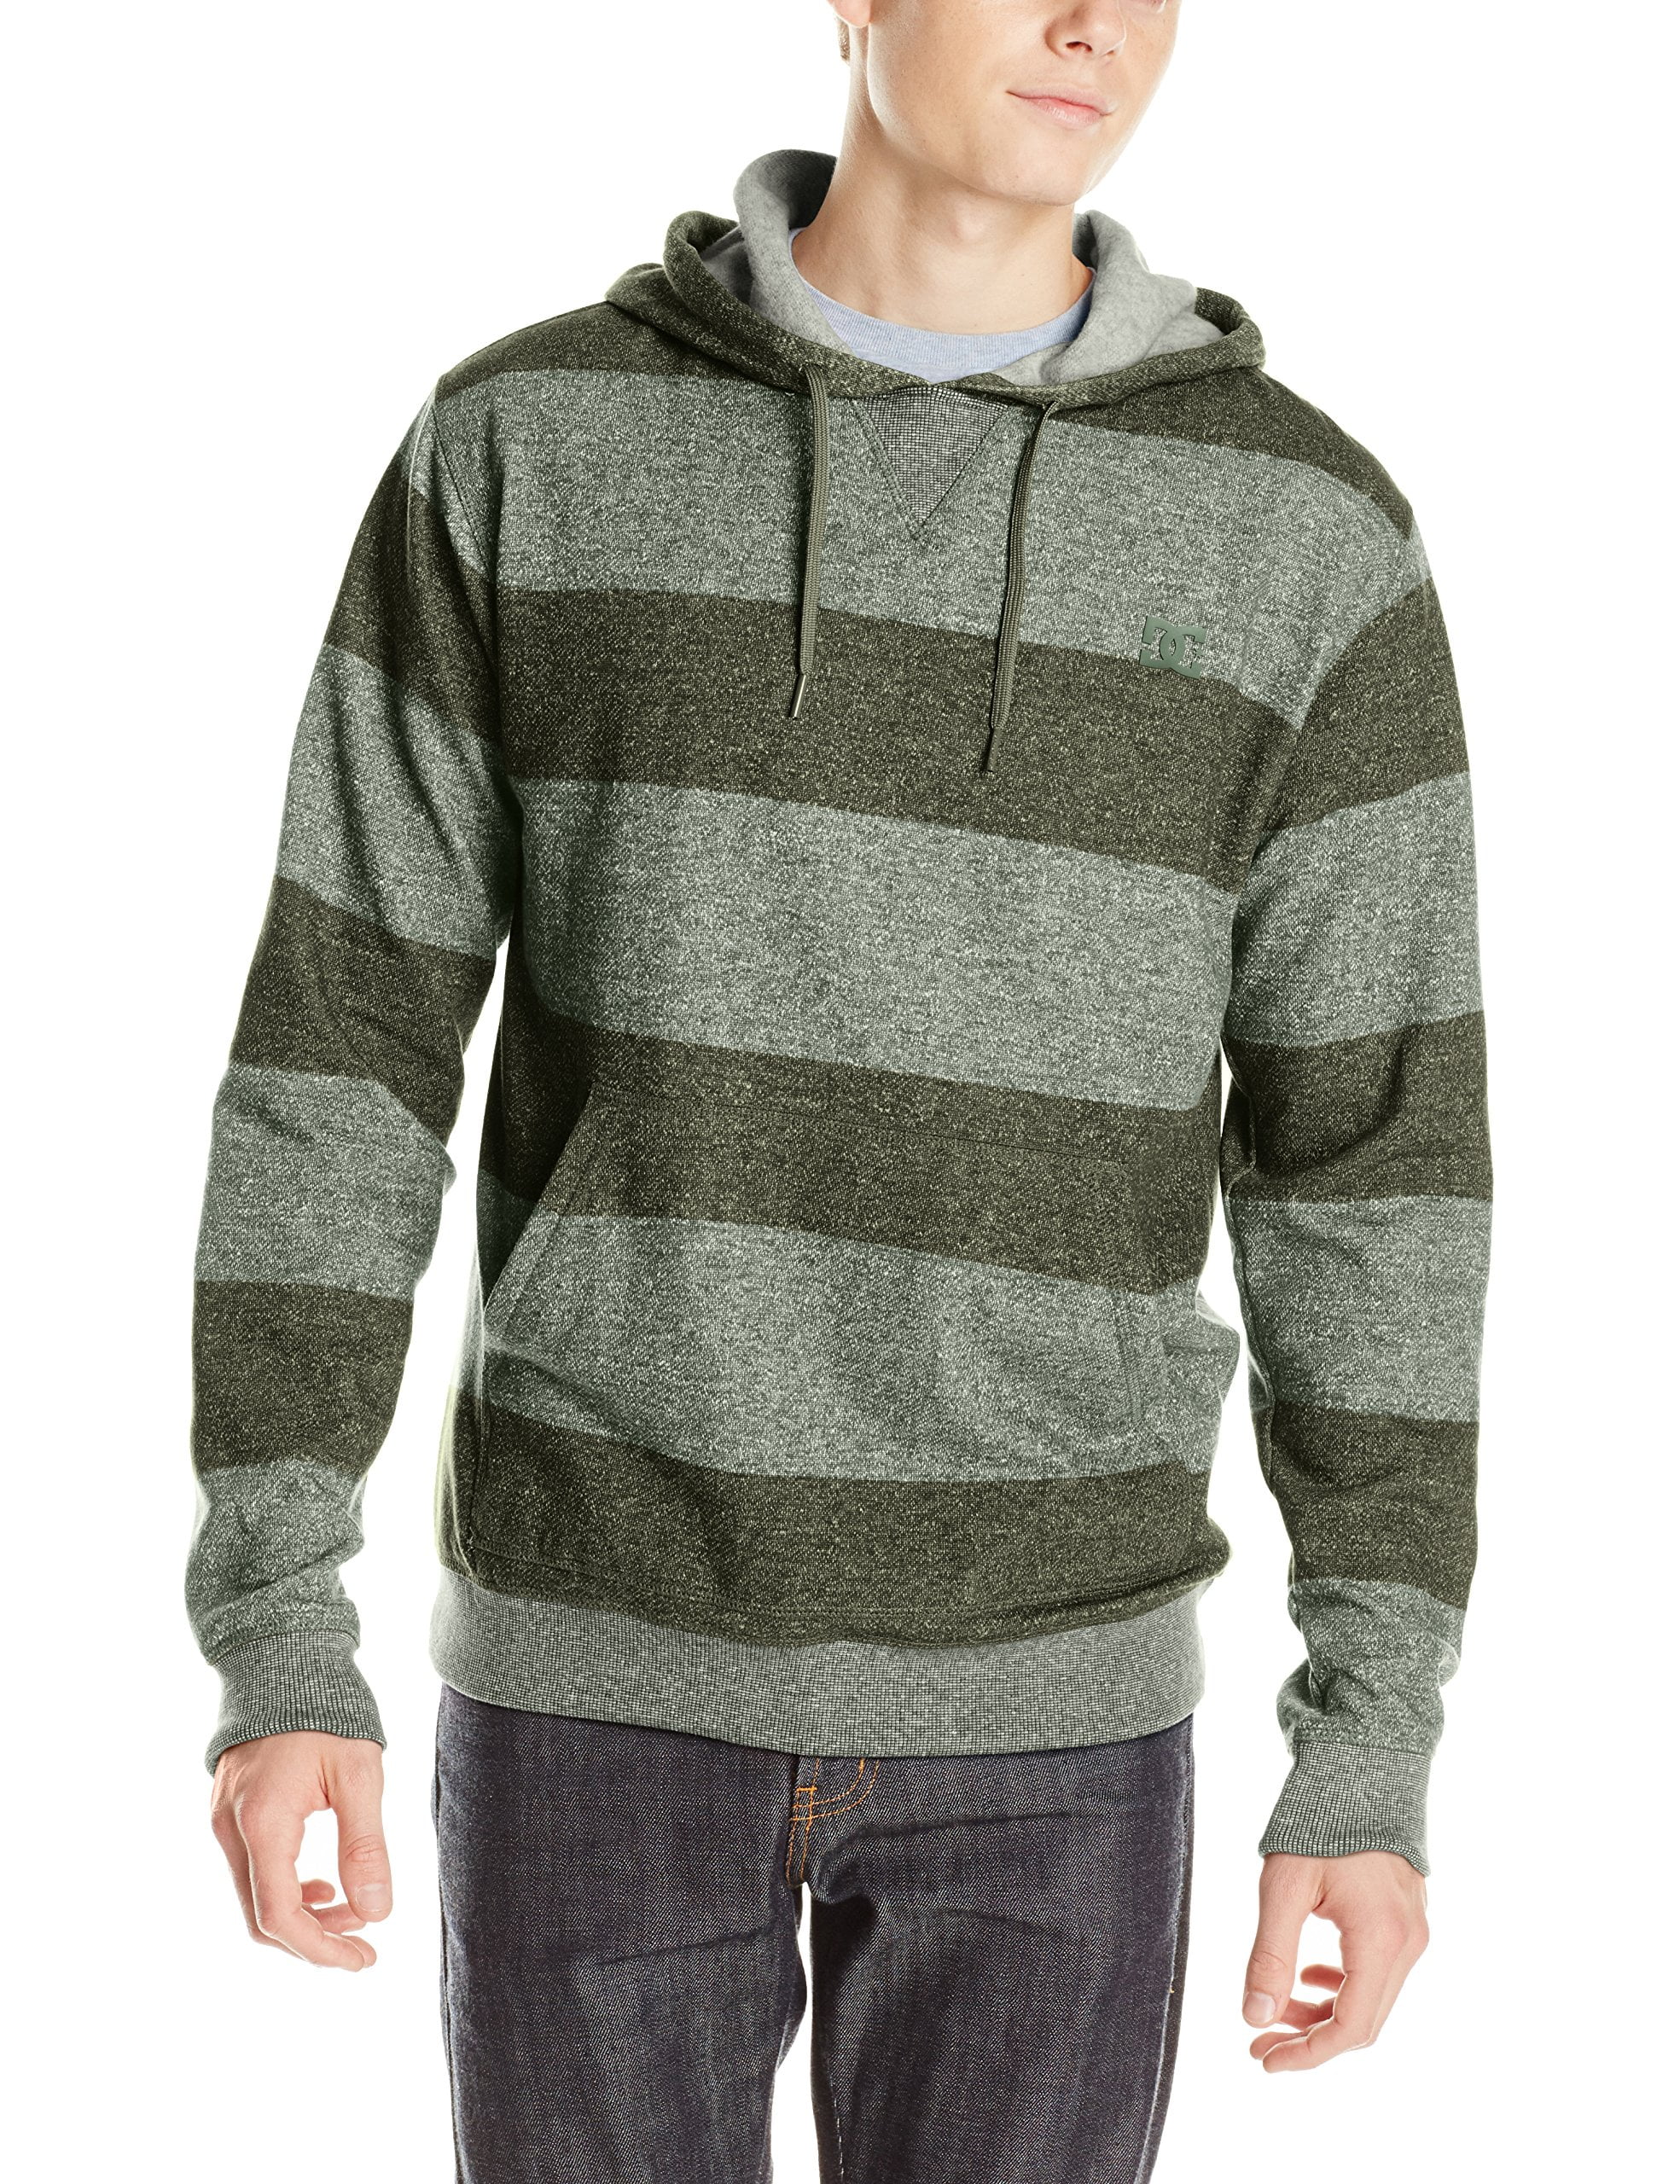 DC Shoes Rebel Stripe Boy's Sweatshirt Hoodie  Size S  Small 